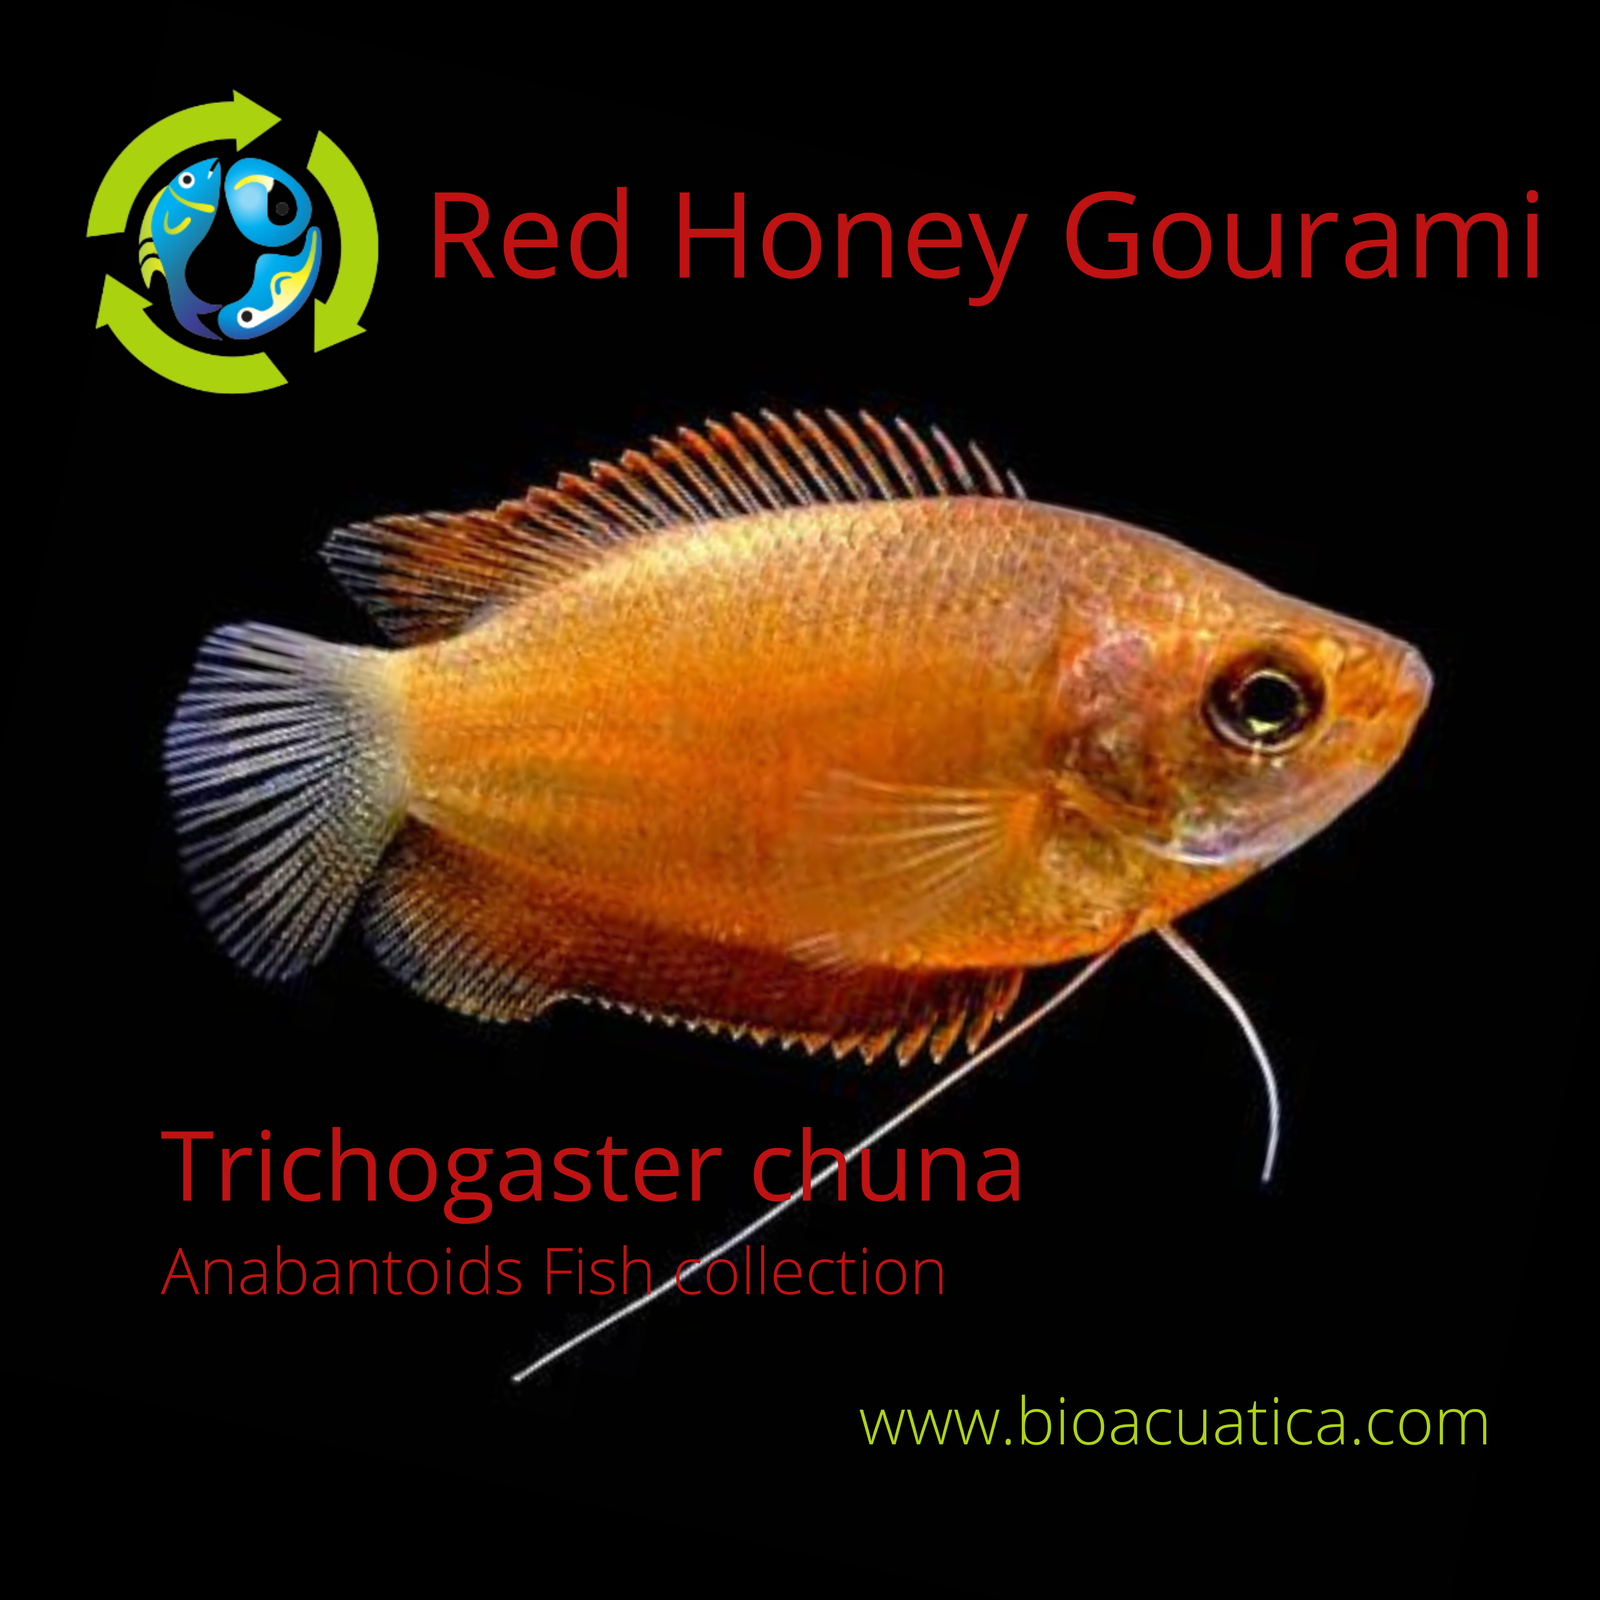 Super red honey gourai to trichogaster chuna